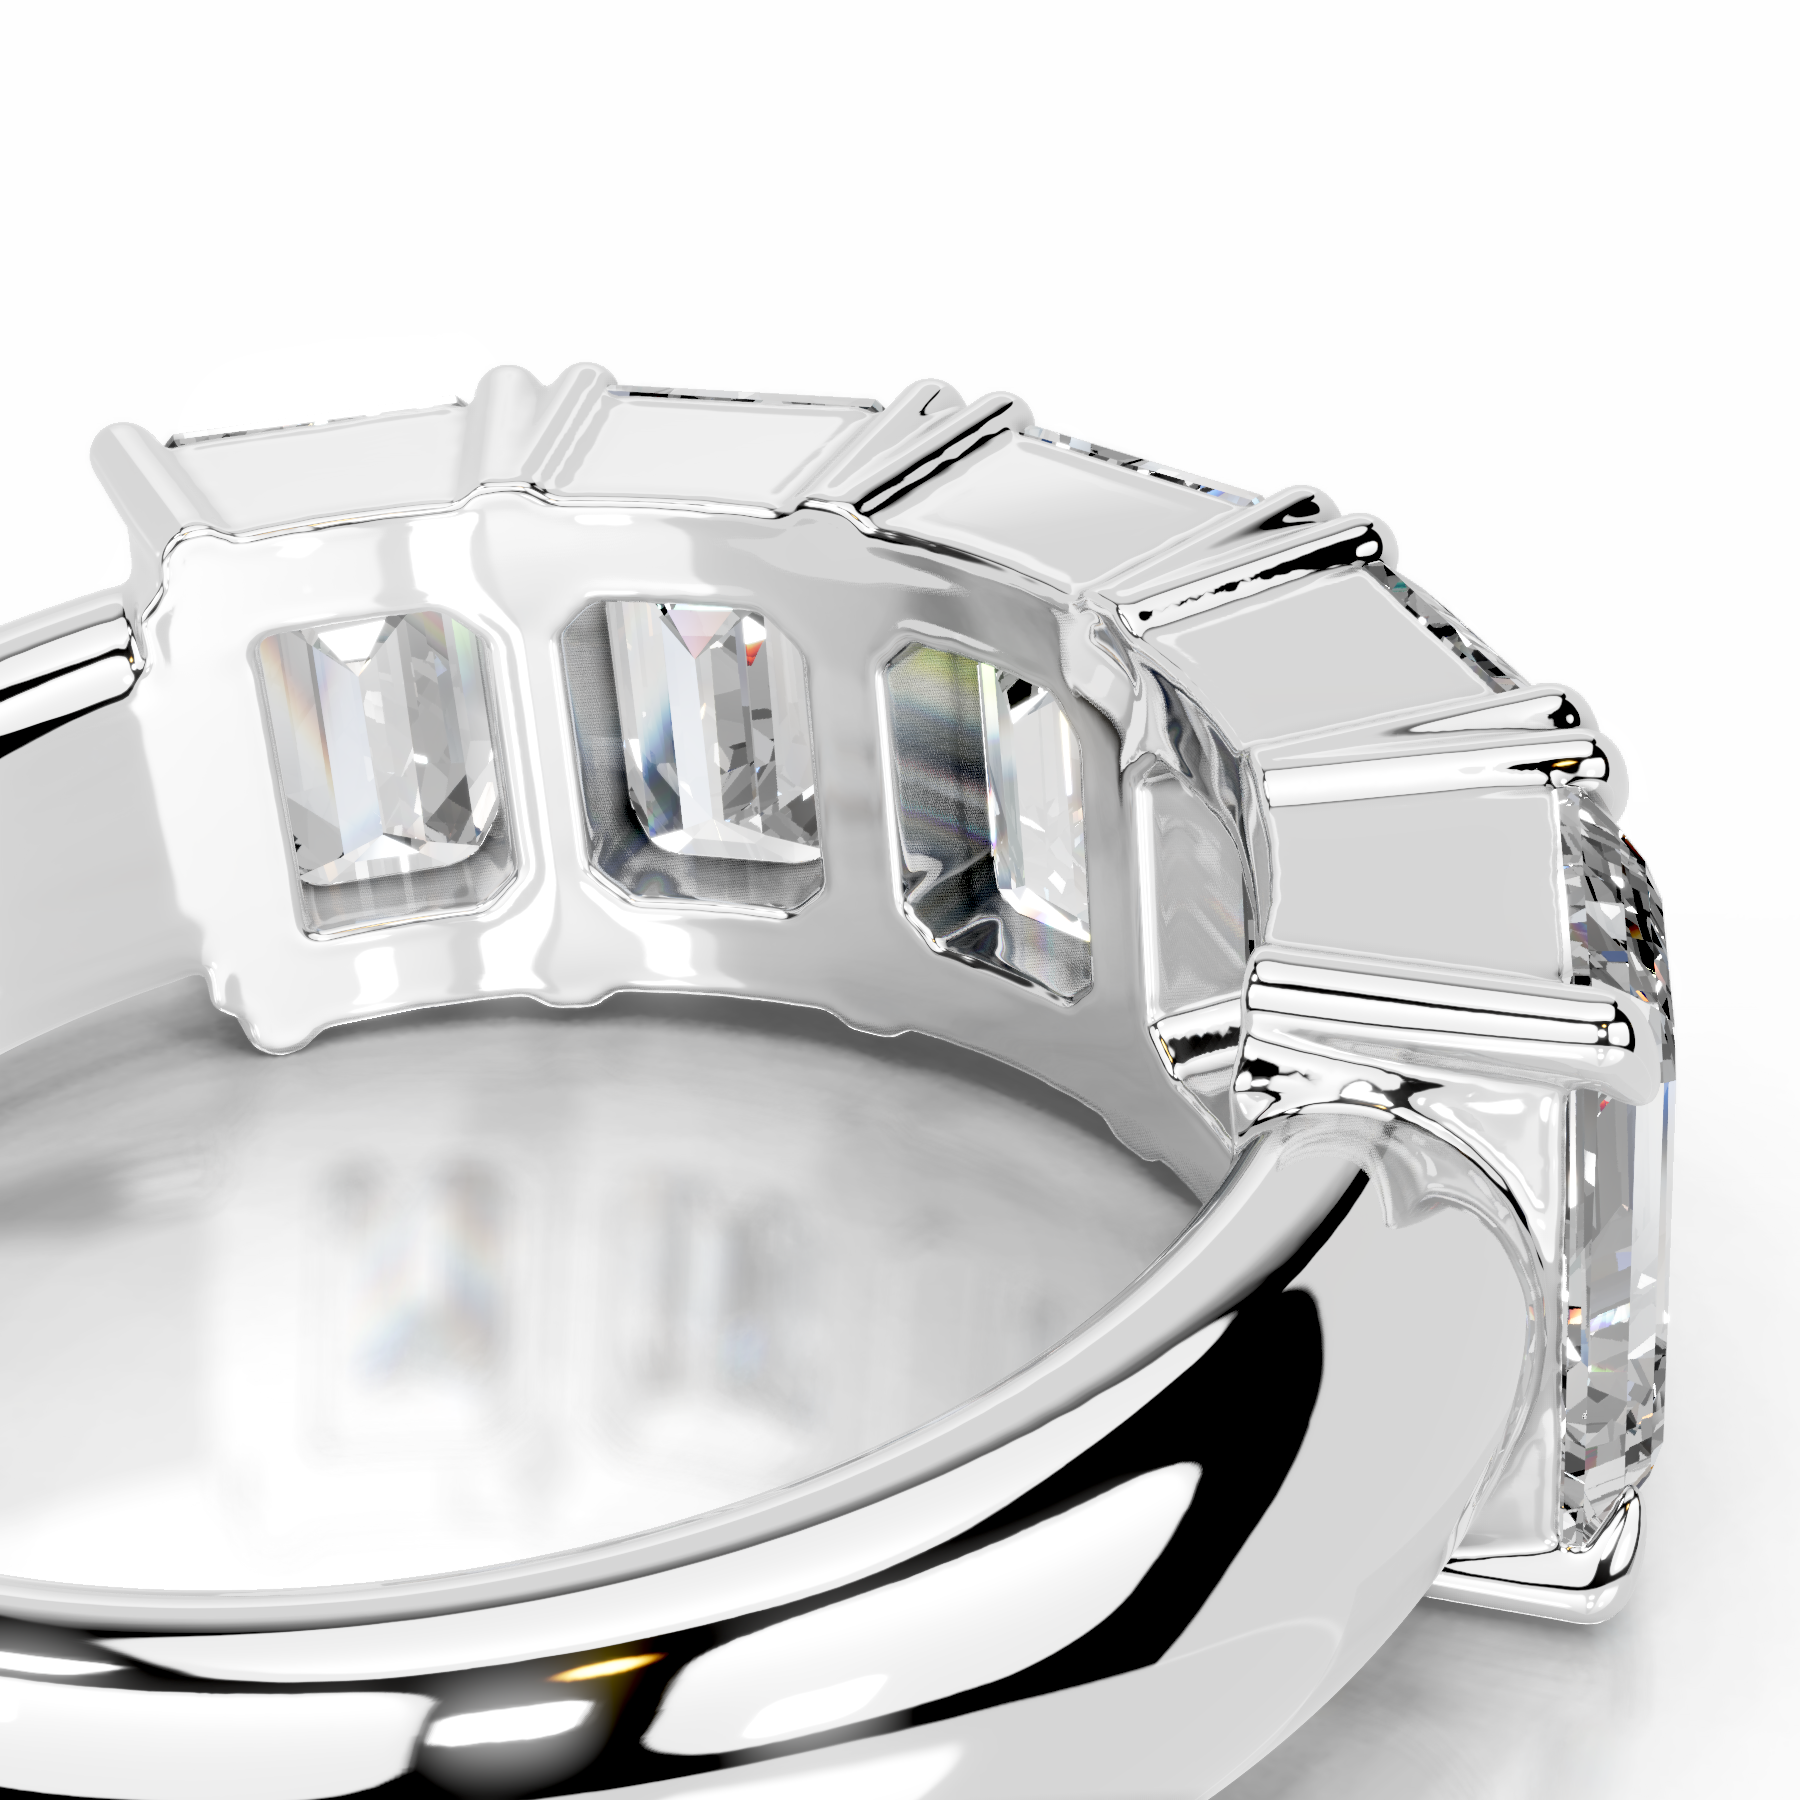 Shandra Diamond Wedding Ring   (2.5 Carat) -14K White Gold